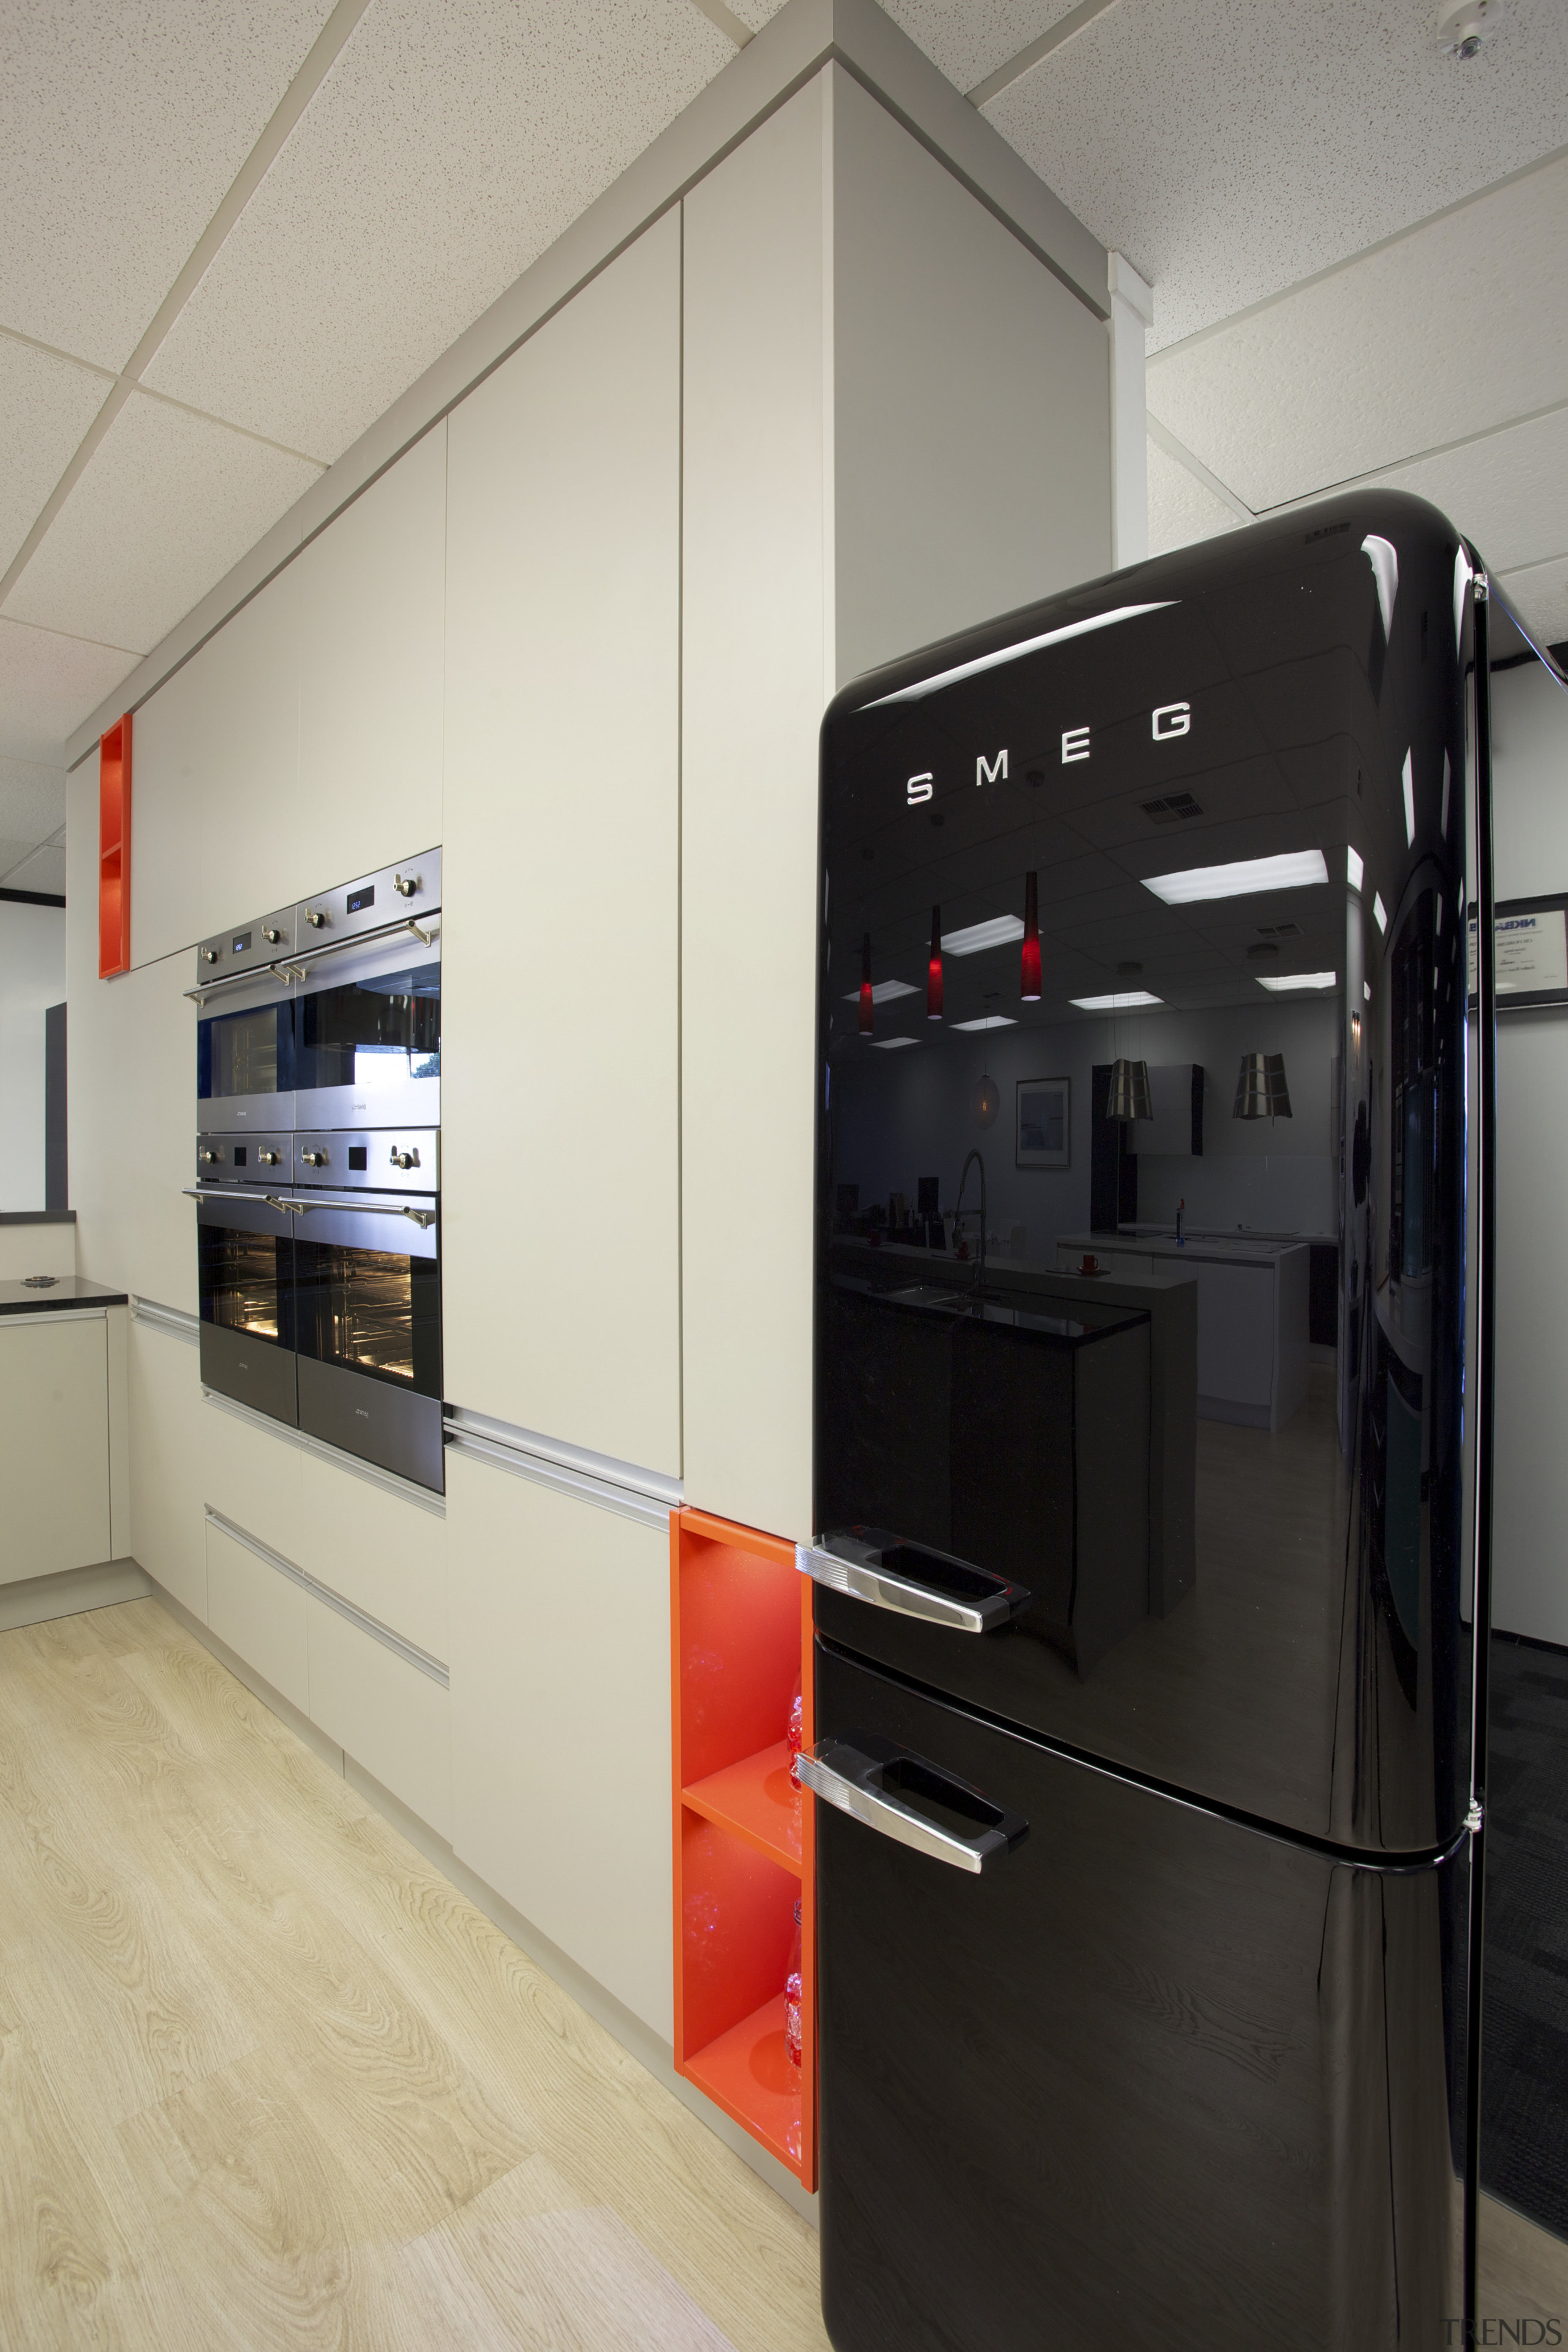 Smeg appliances in Inside Vision kitchen showroom - interior design, product design, gray, black